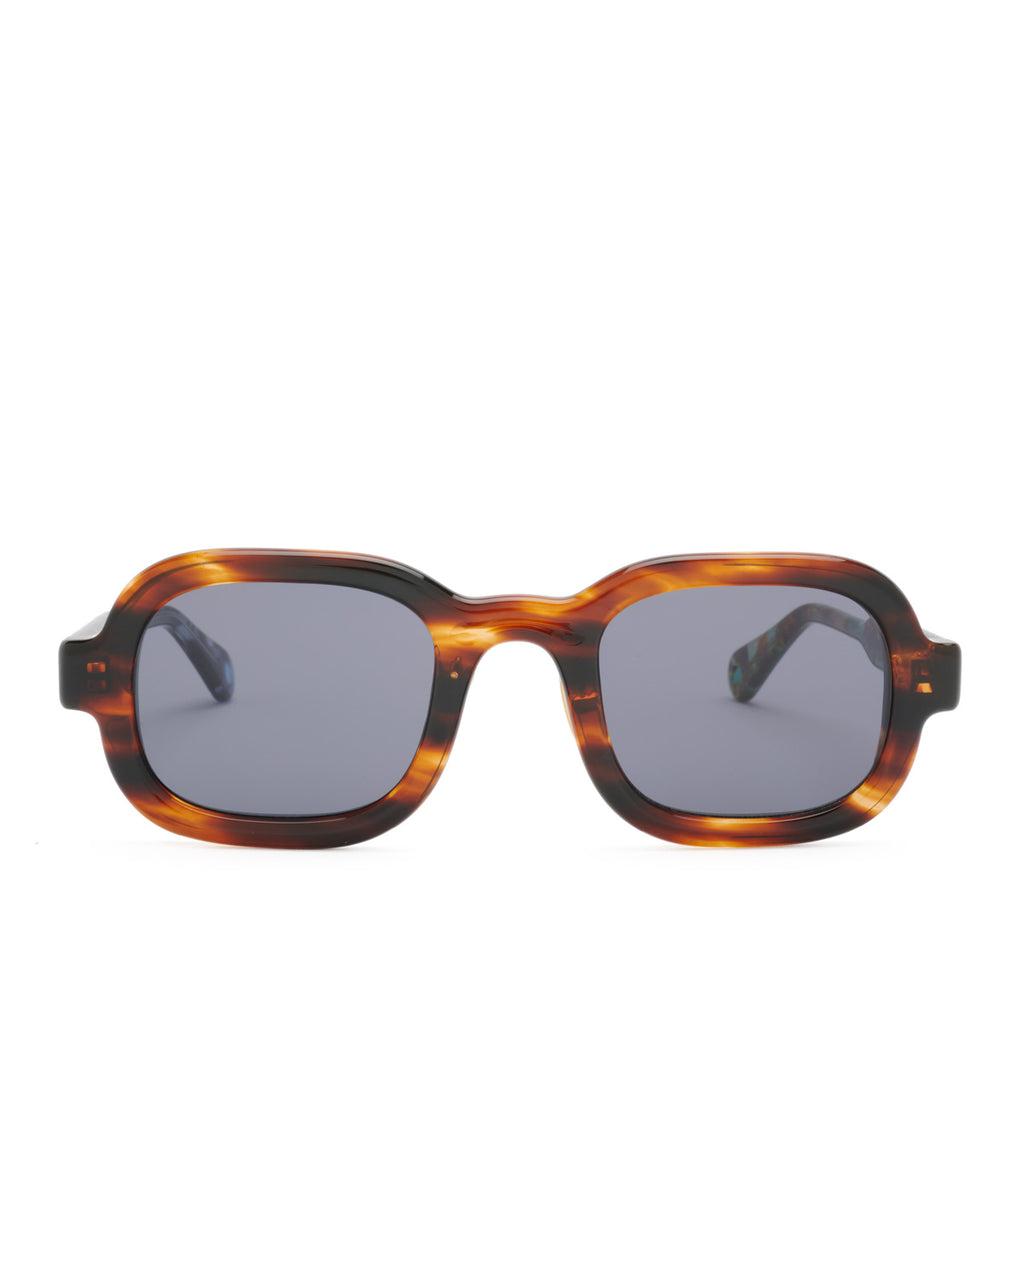 Newman Post Modern Primitive Eye Protection Sunglasses - Triple/Grey